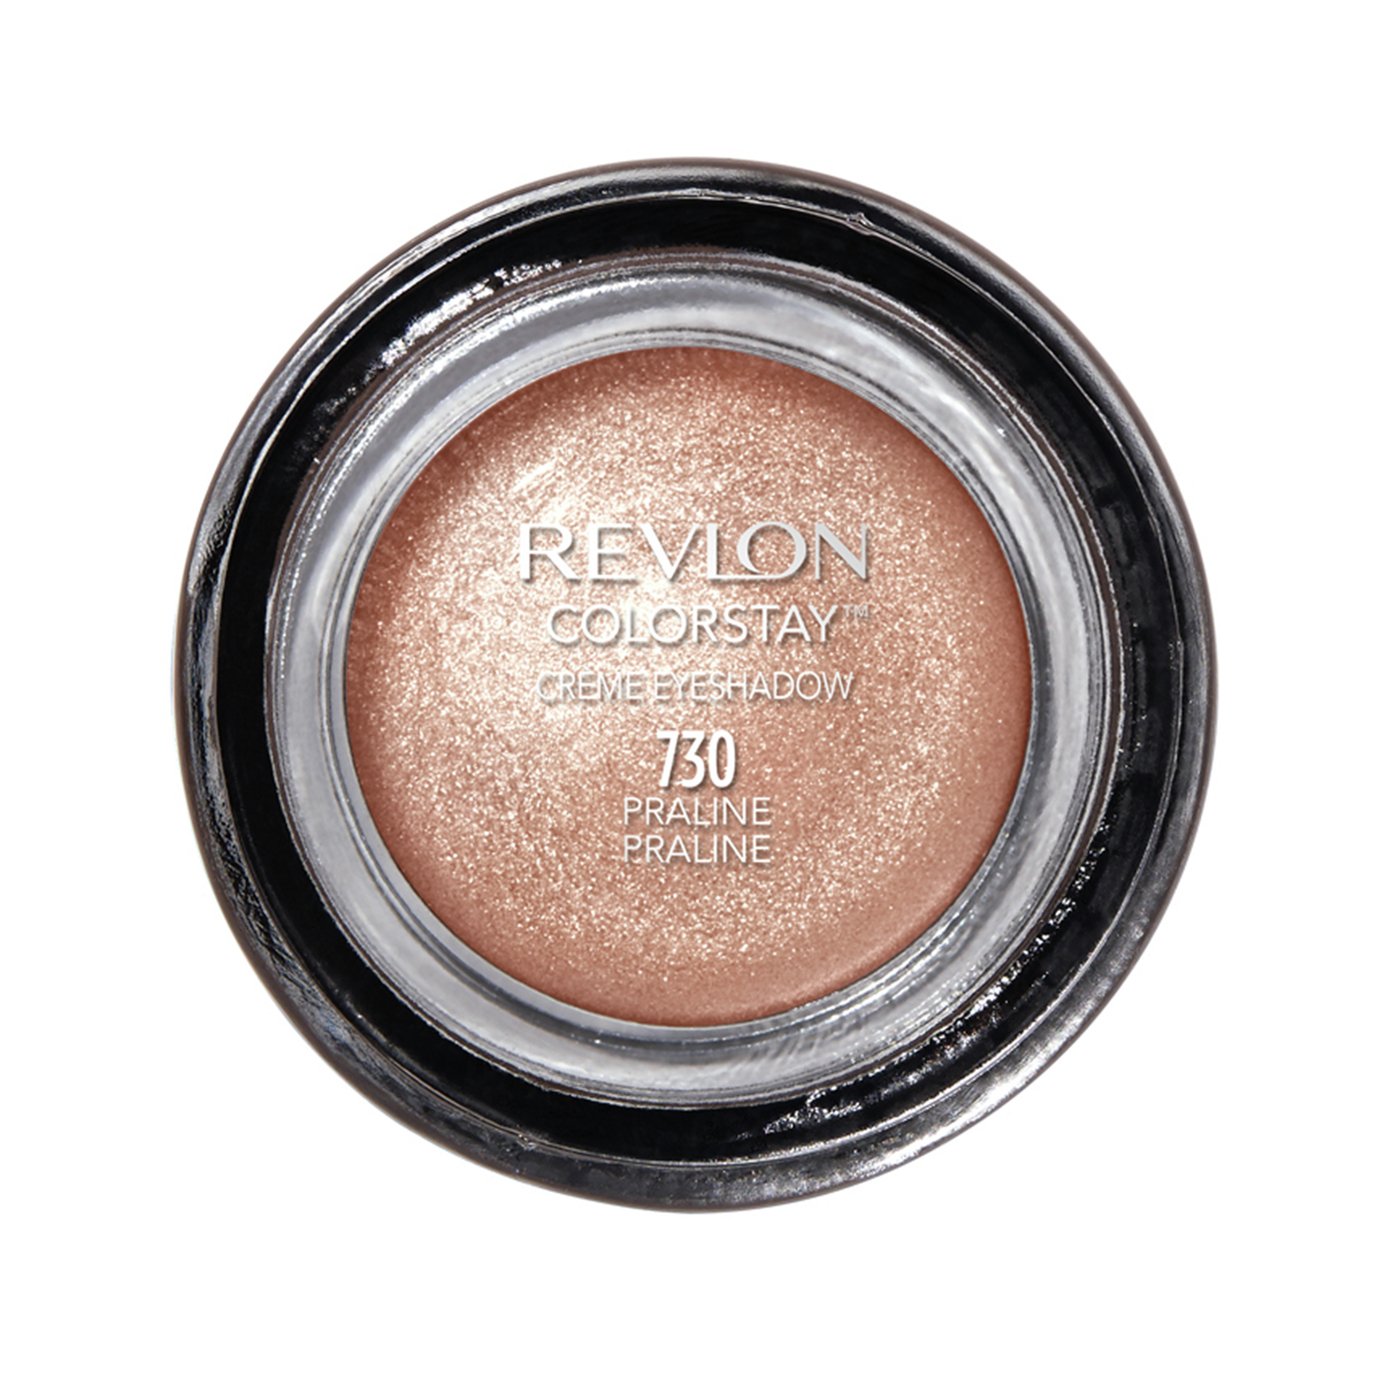 Revlon ColorStay Creme Eye Shadow - Praline 730